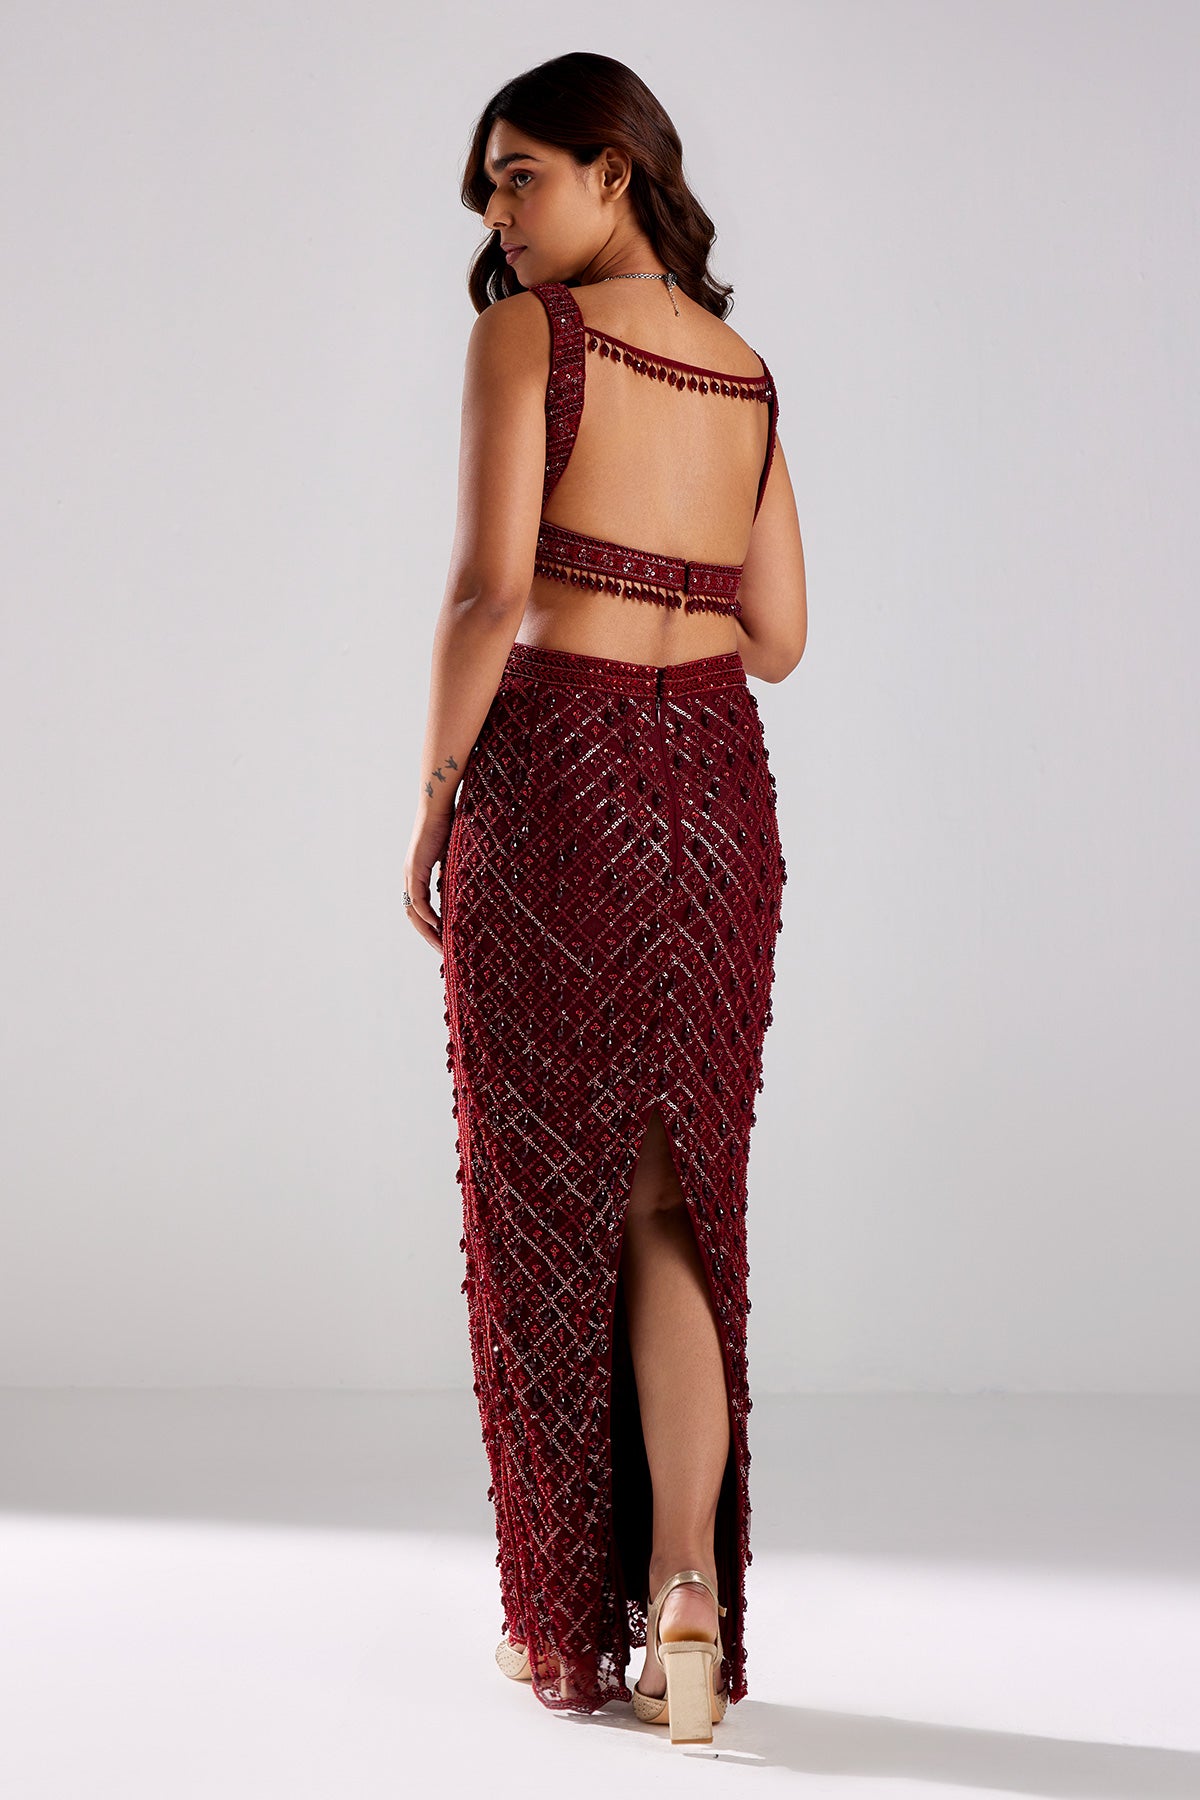 Marsala Red Embroidered Crop Top-skirt Set